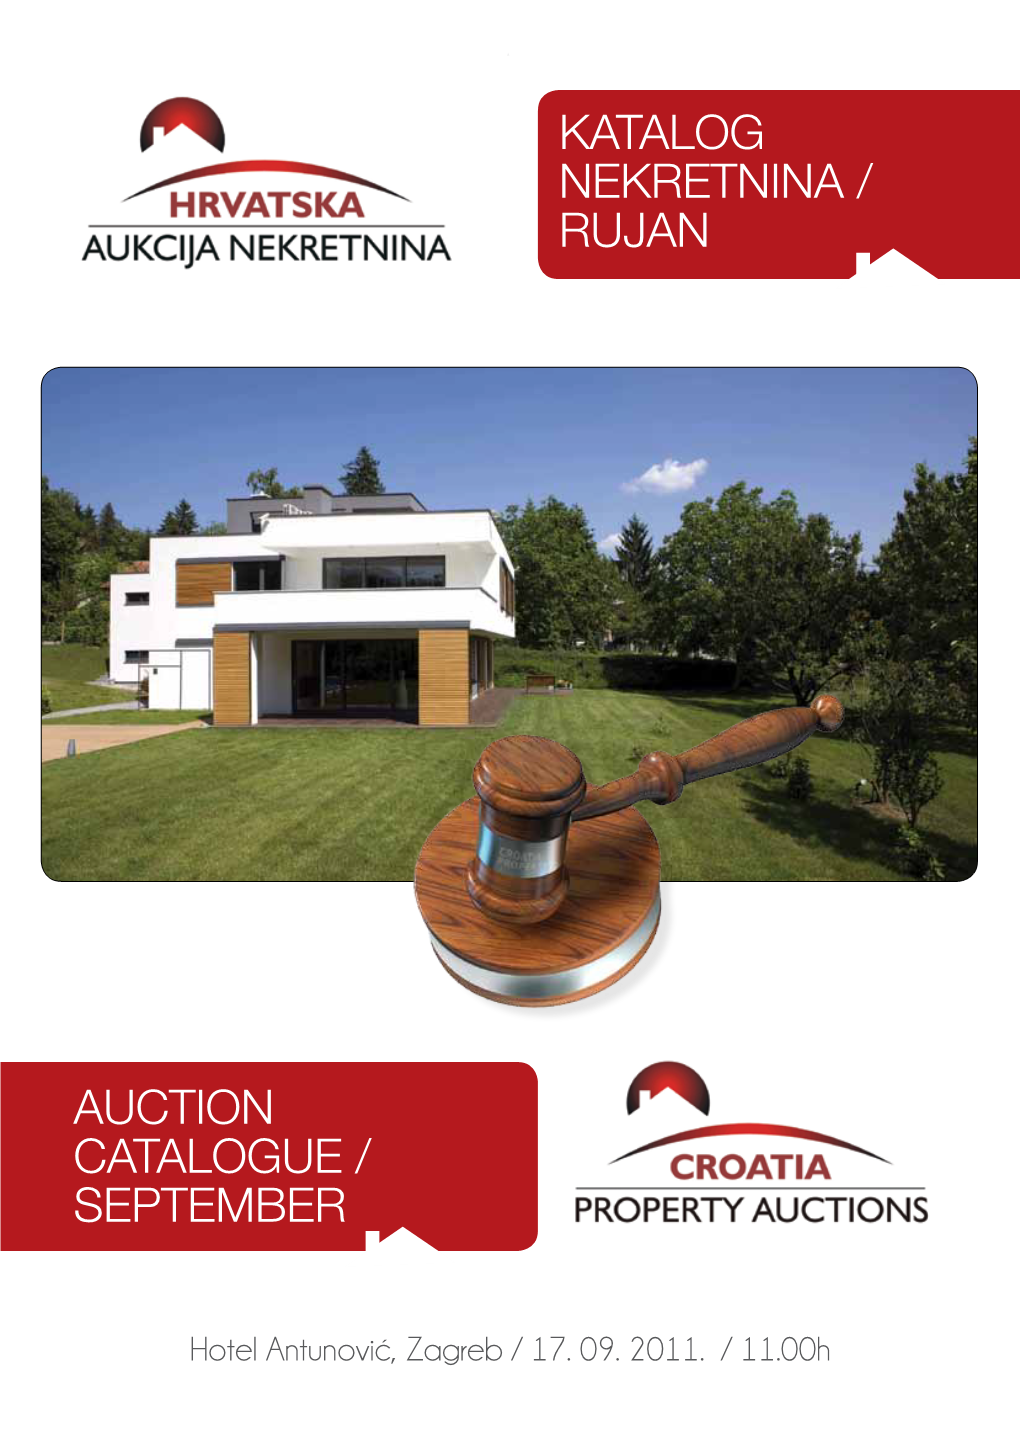 Katalog Nekretnina / Rujan Auction Catalogue